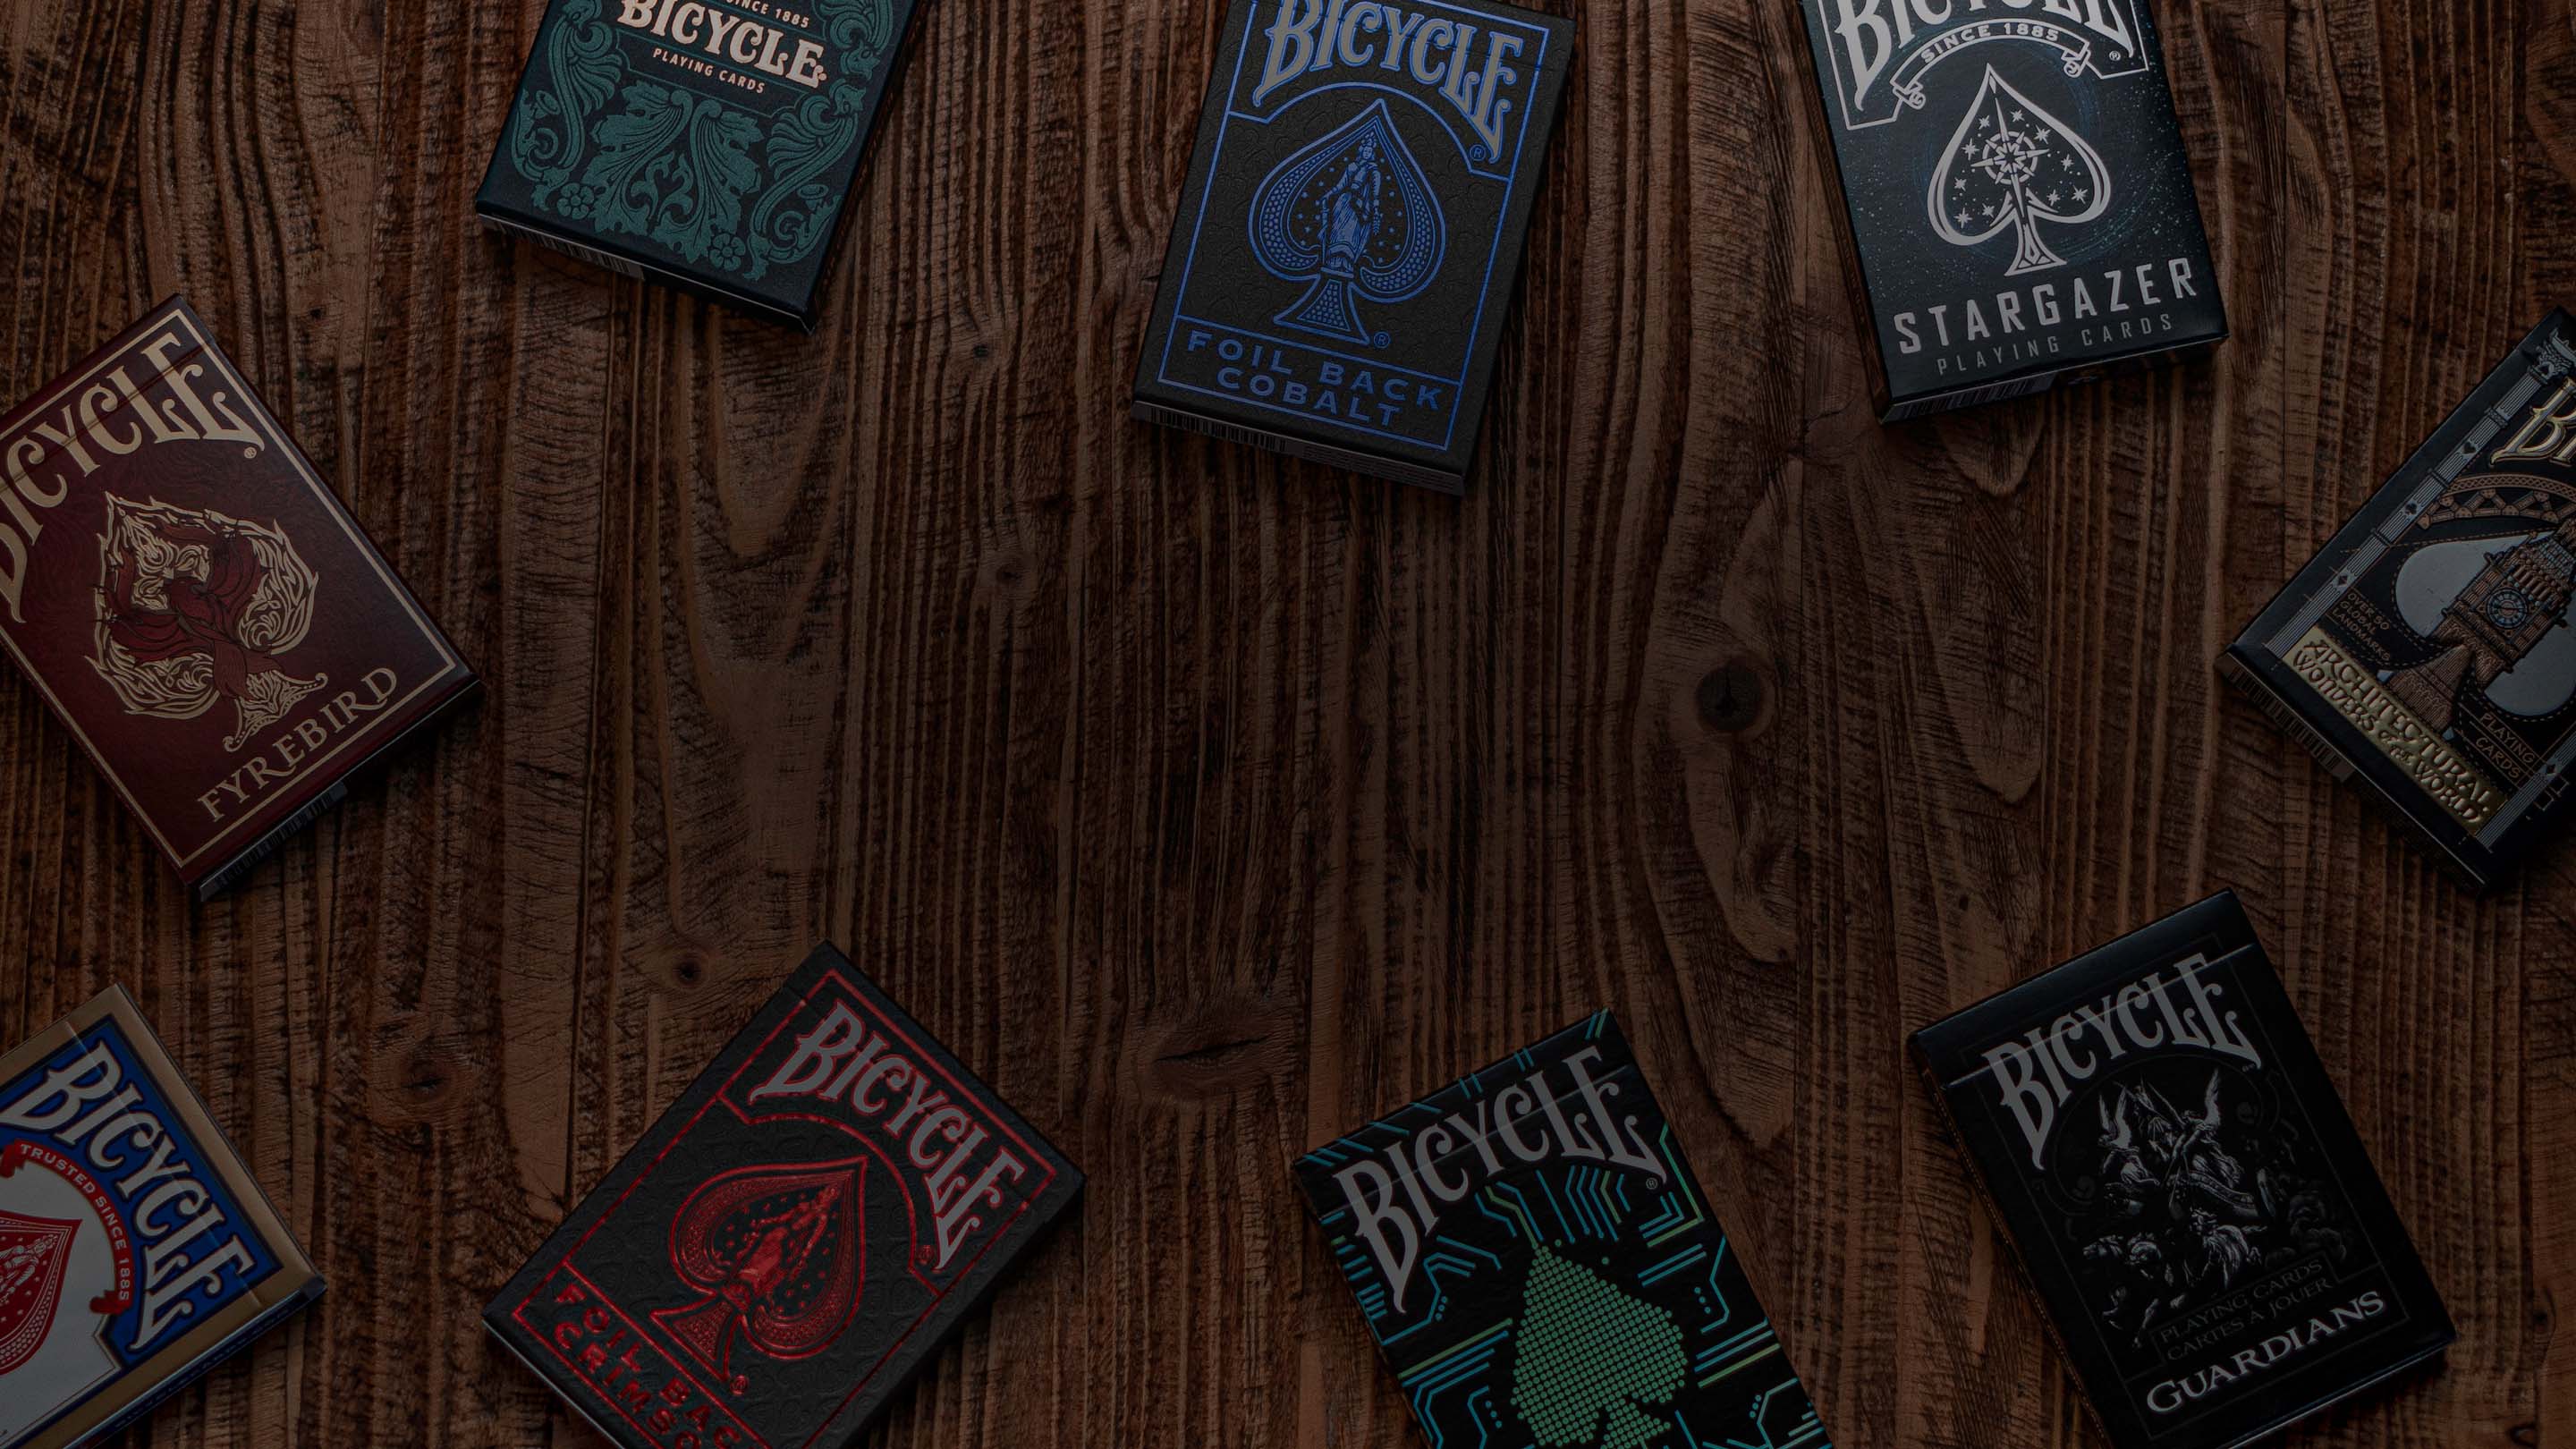 jeu-cartes-bicycle-harry-potter-AgilityMagicirk